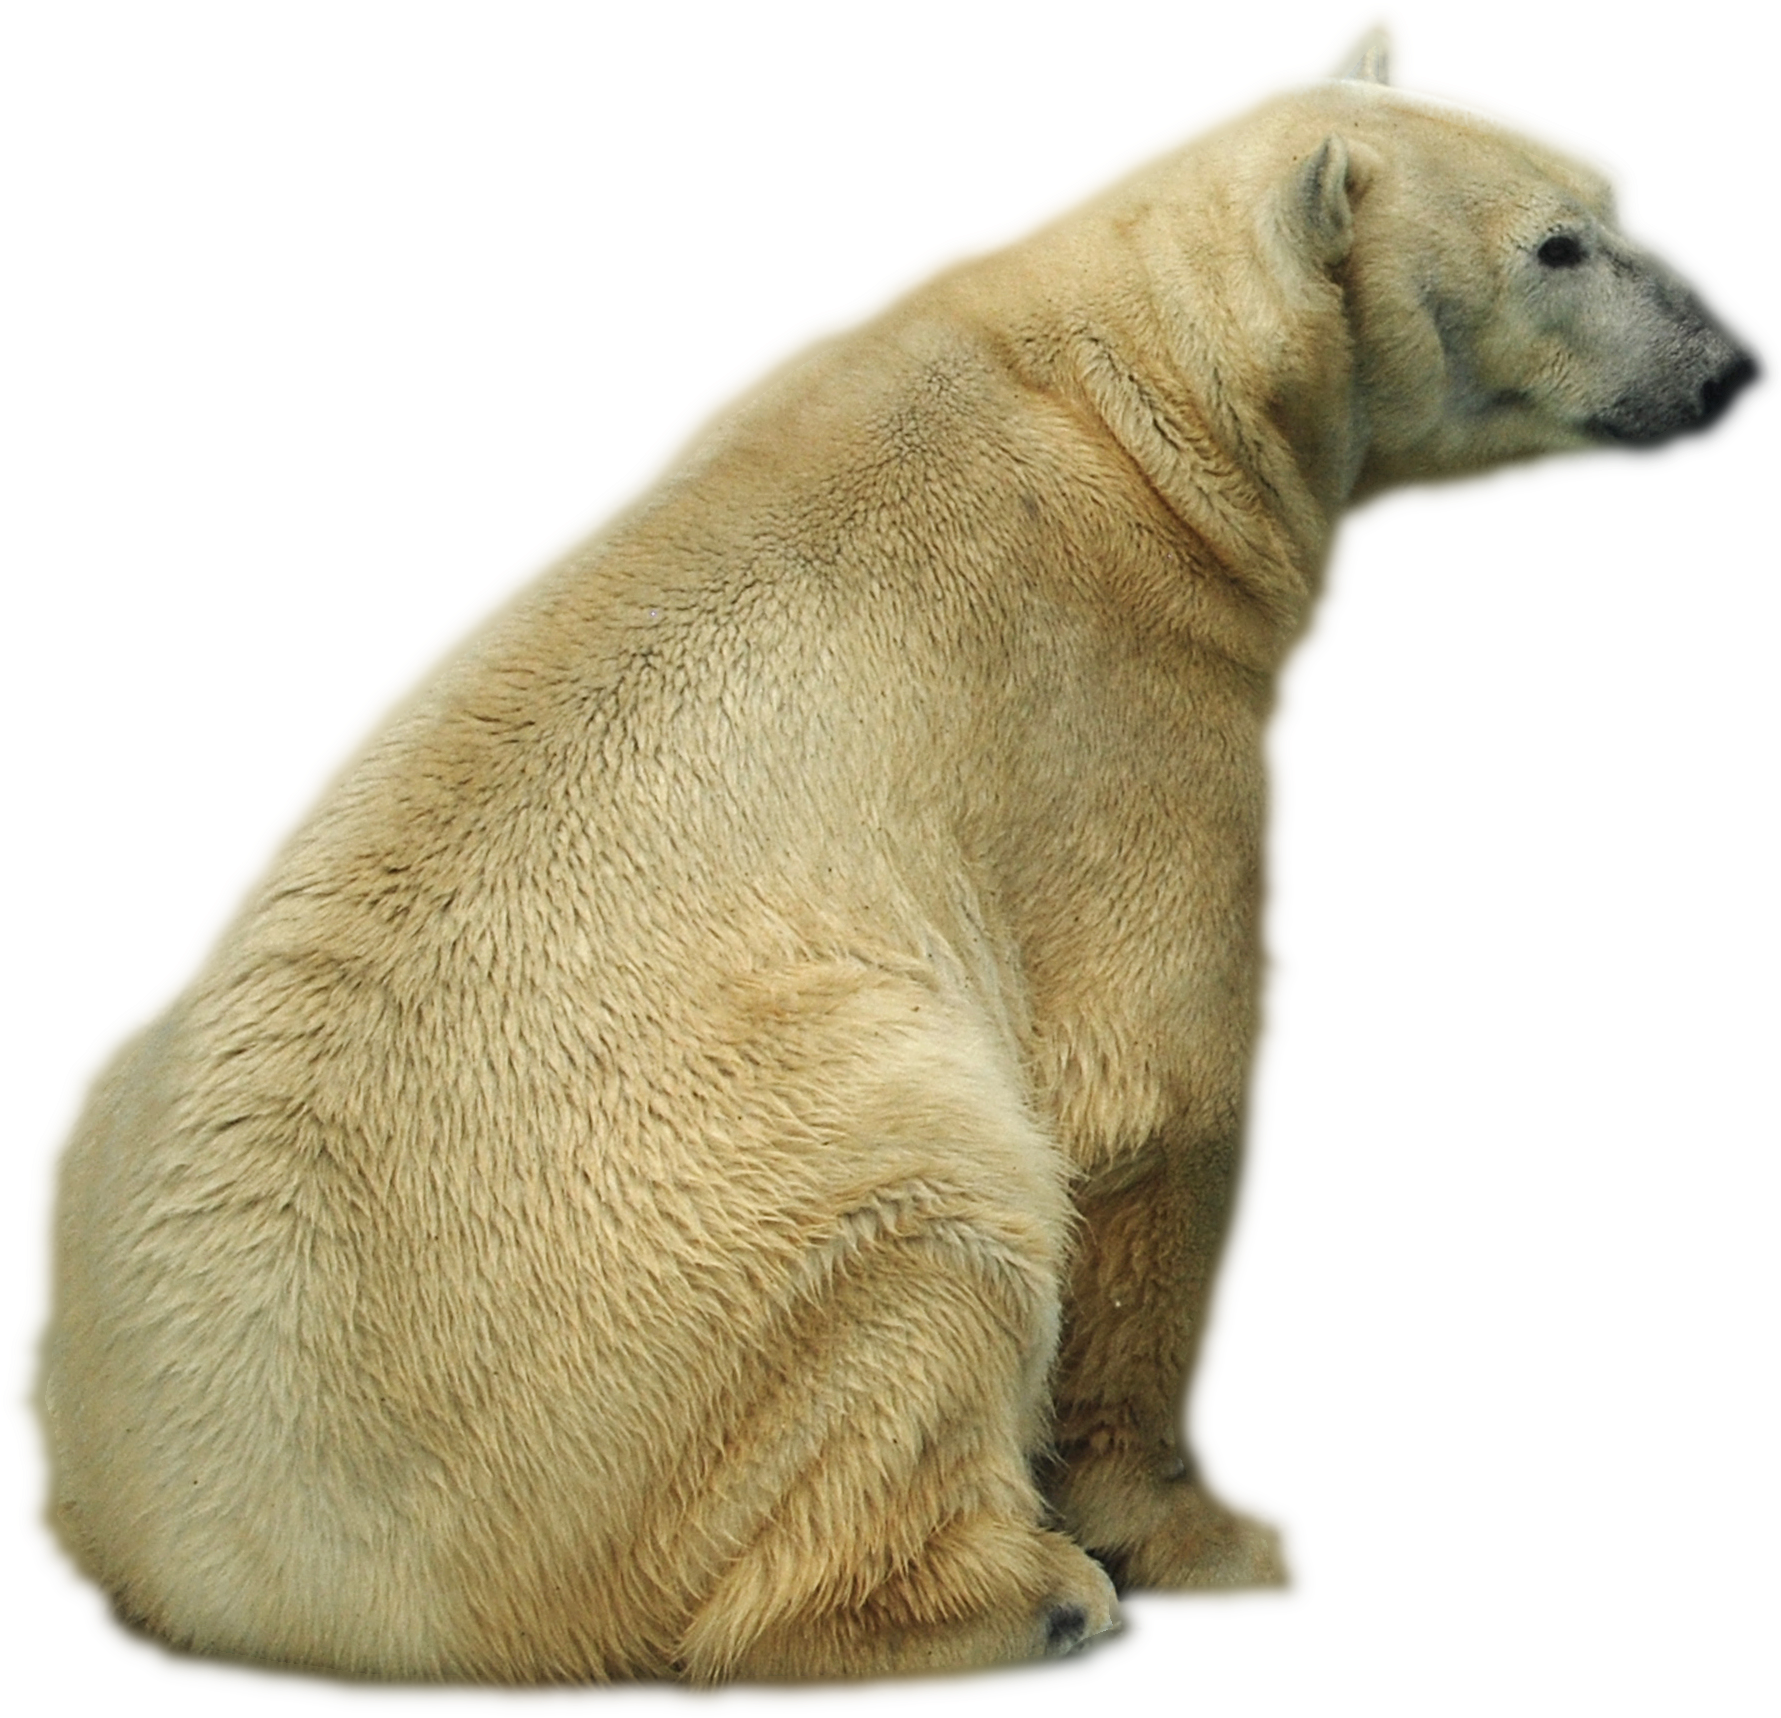 A Polar Bear Sitting On A Black Background